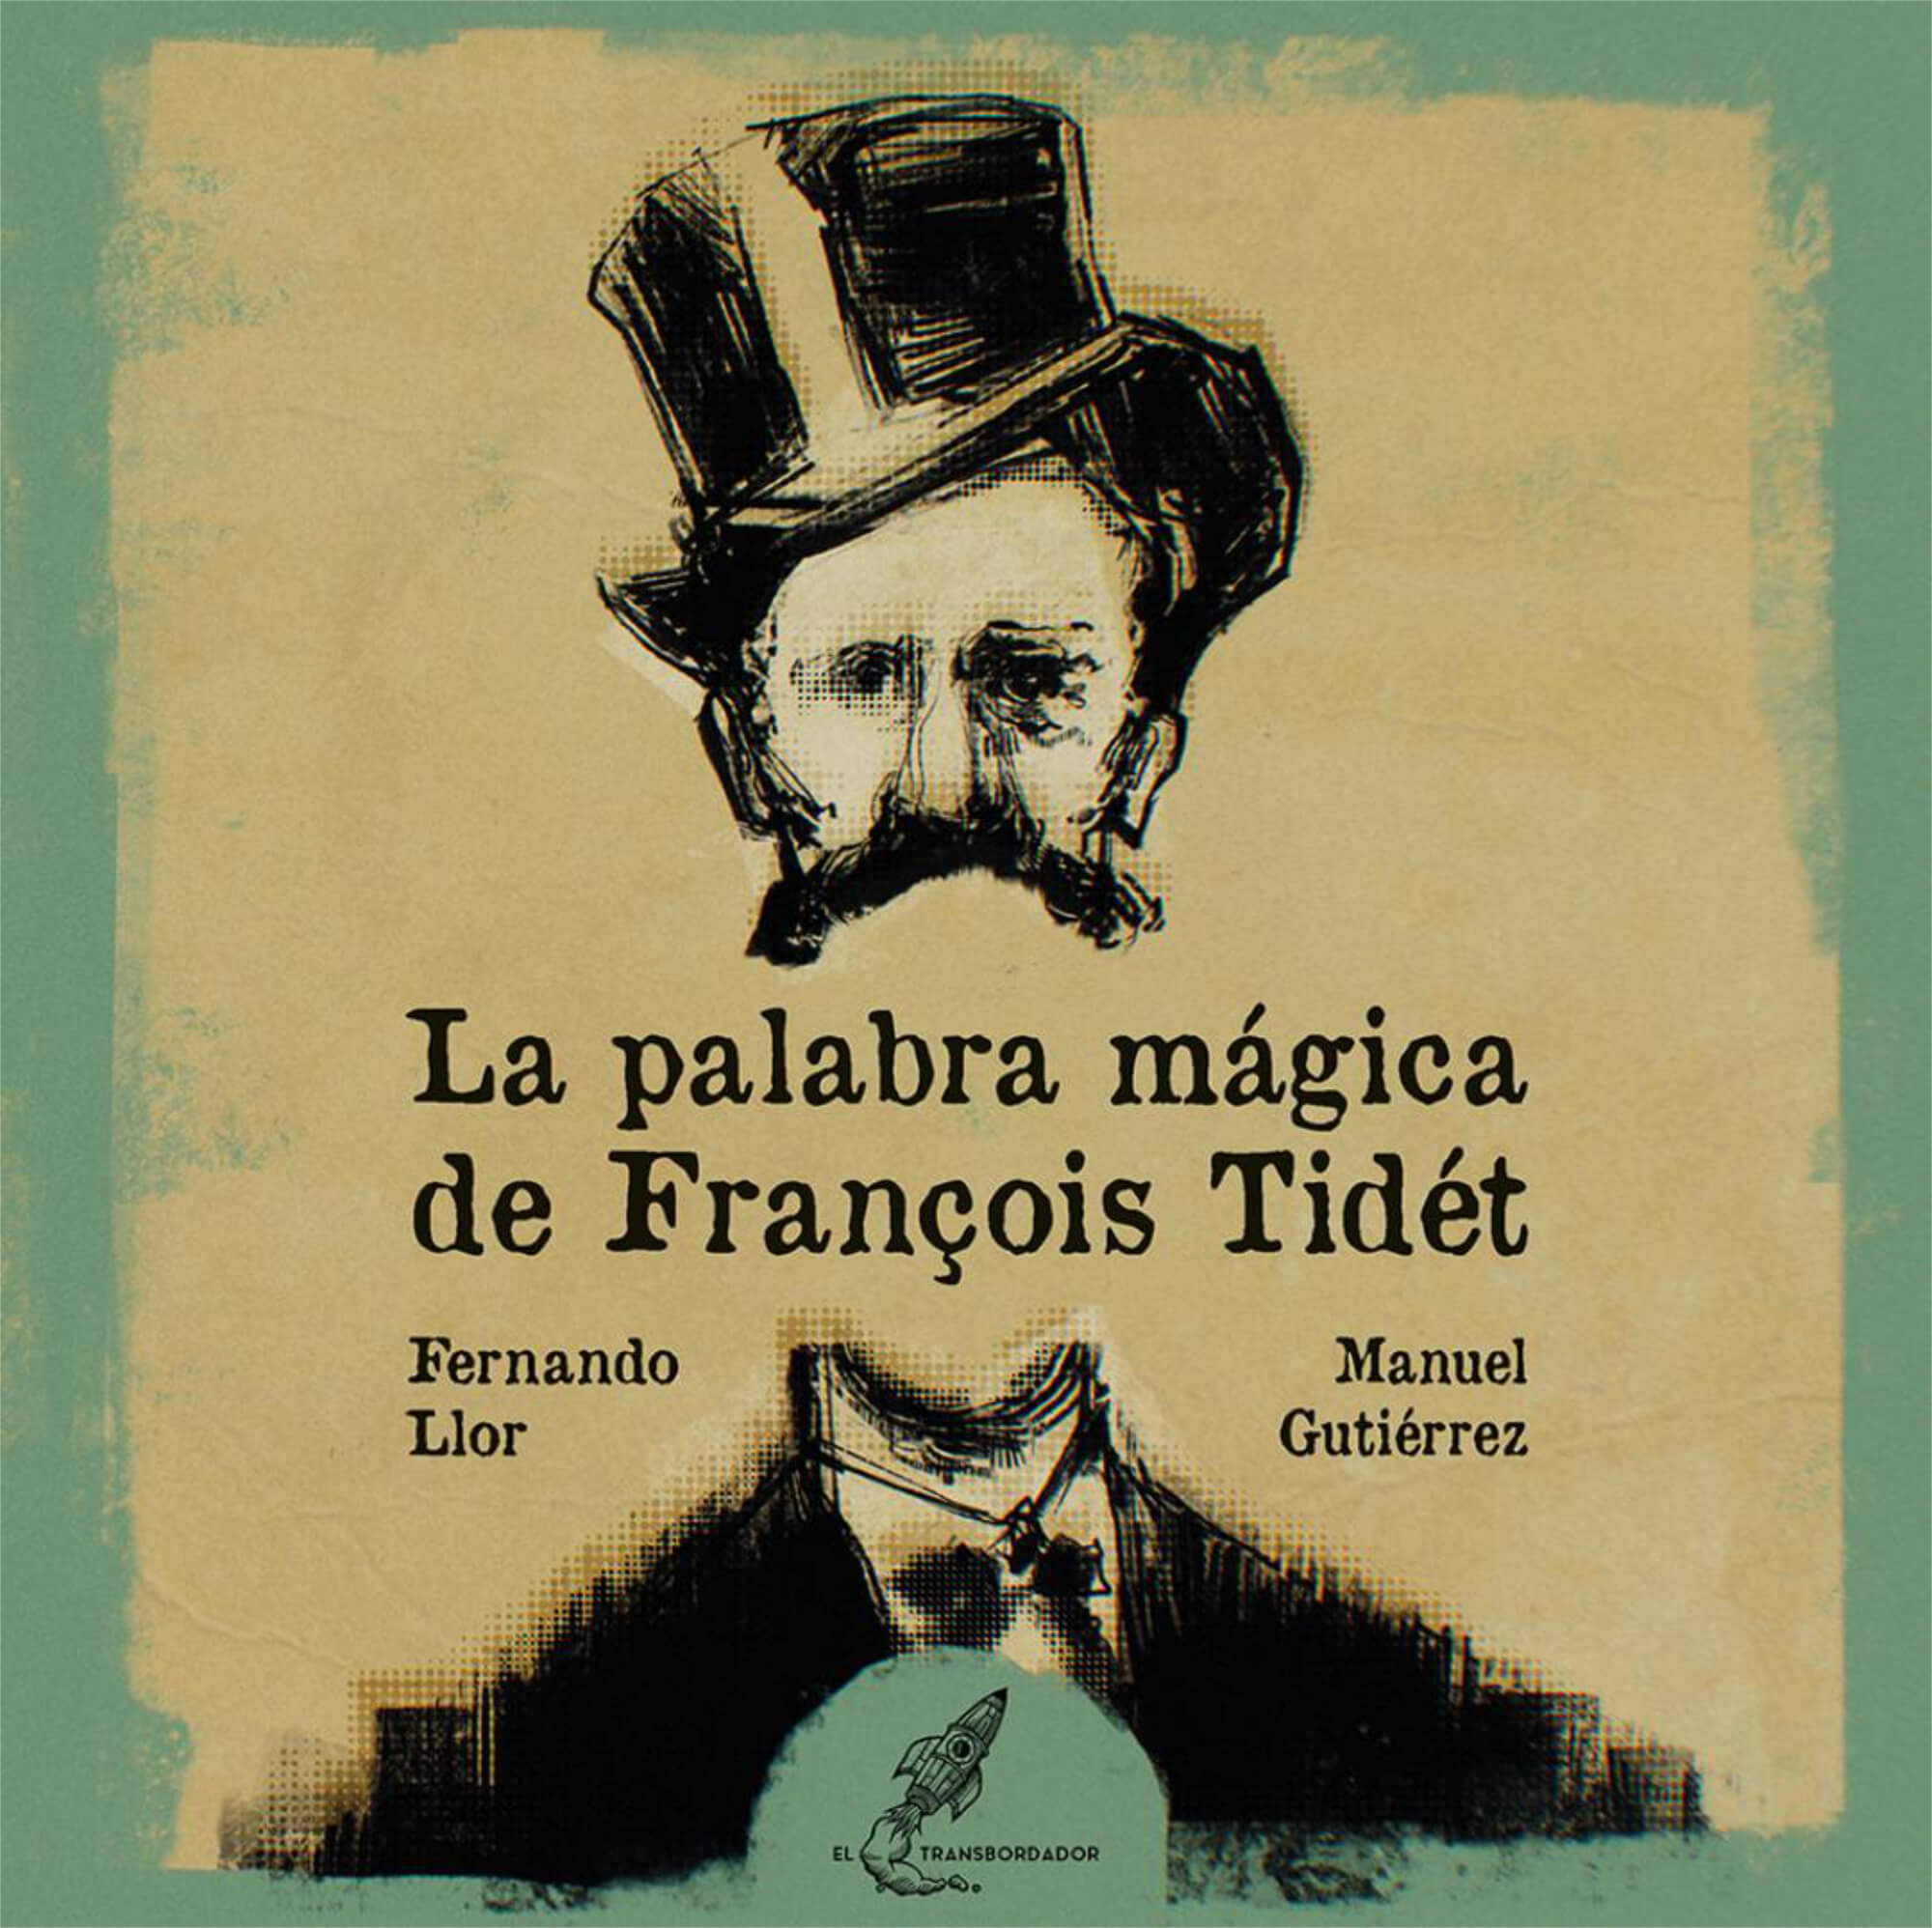 La palabra mágica de François Tidét. Manu Gutiérrez